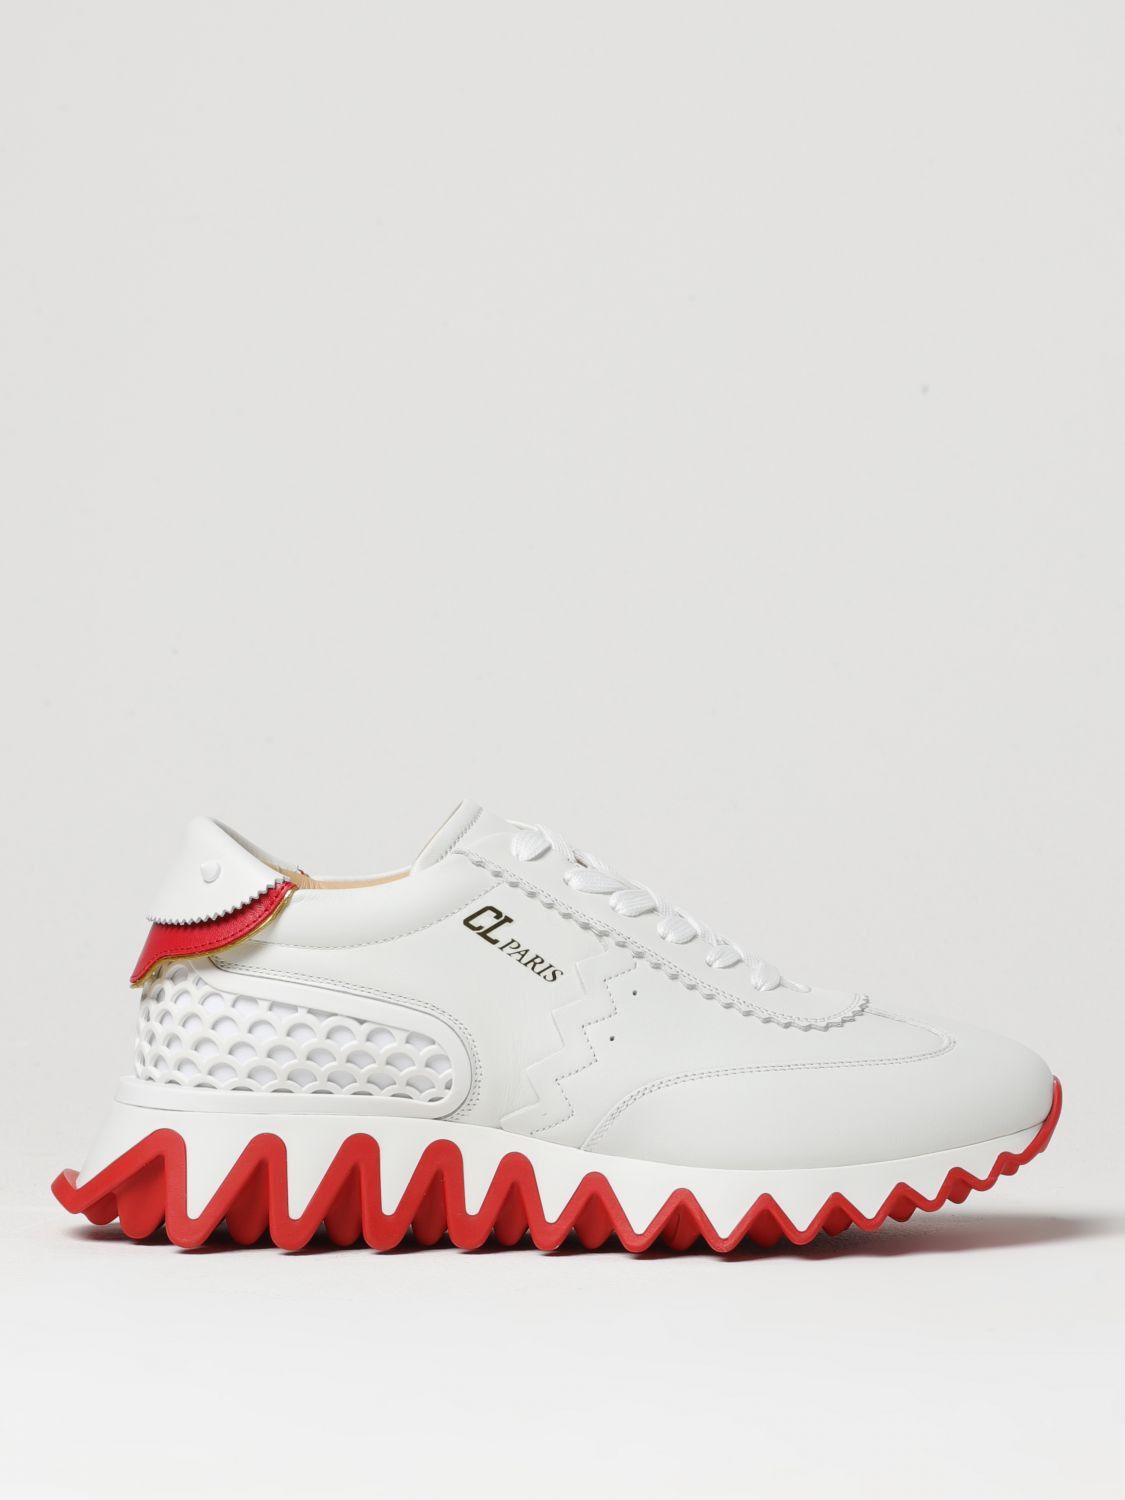 Christian Louboutin Black/White Leather Elastikid Donna Low Top Sneakers Size 38